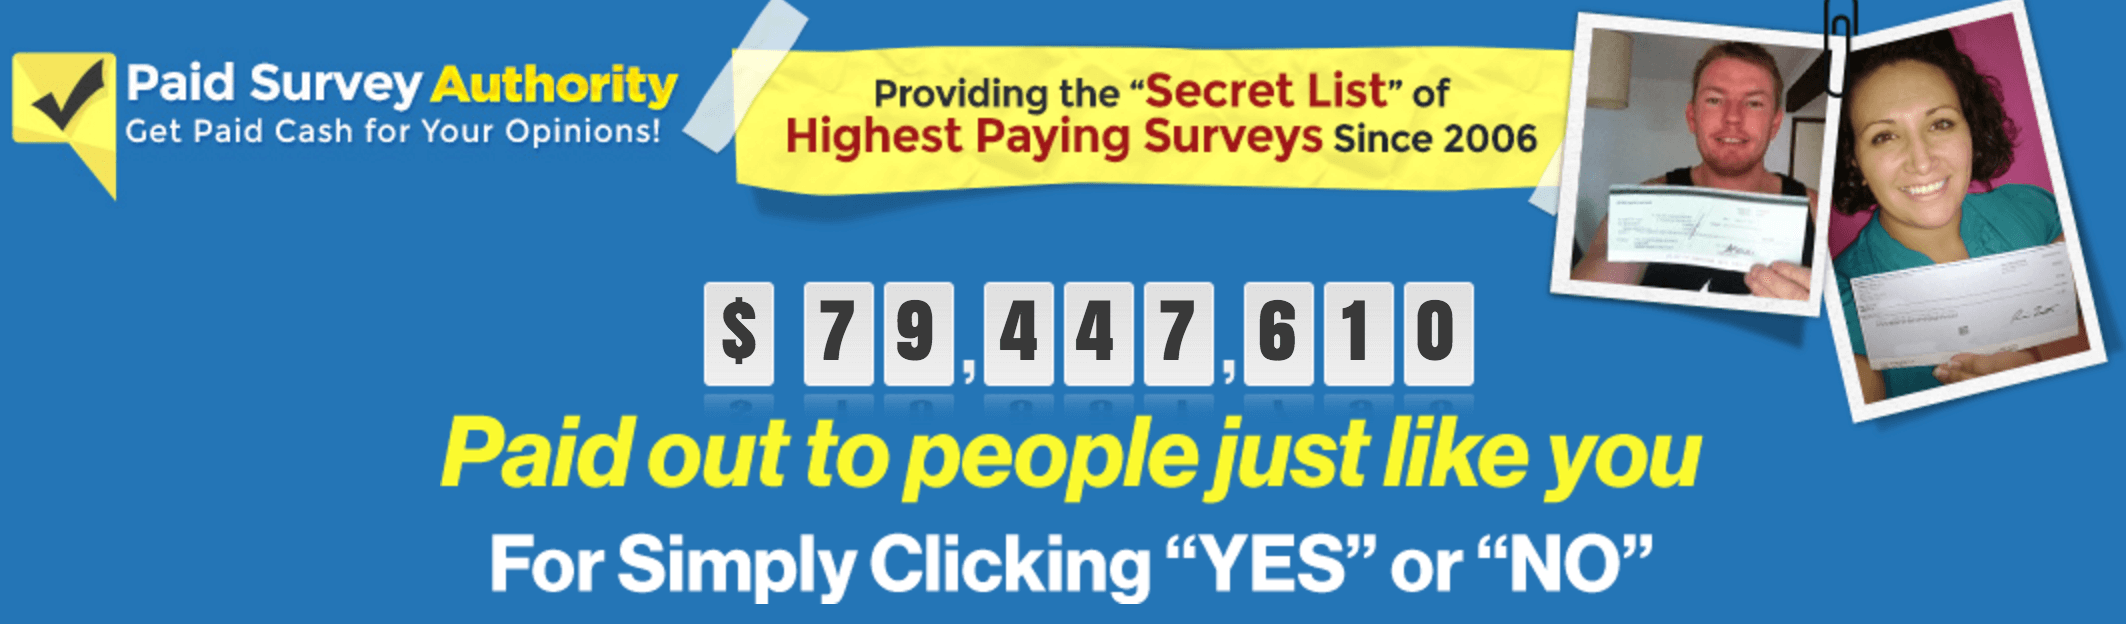 paid-survey-authority-scam-logo